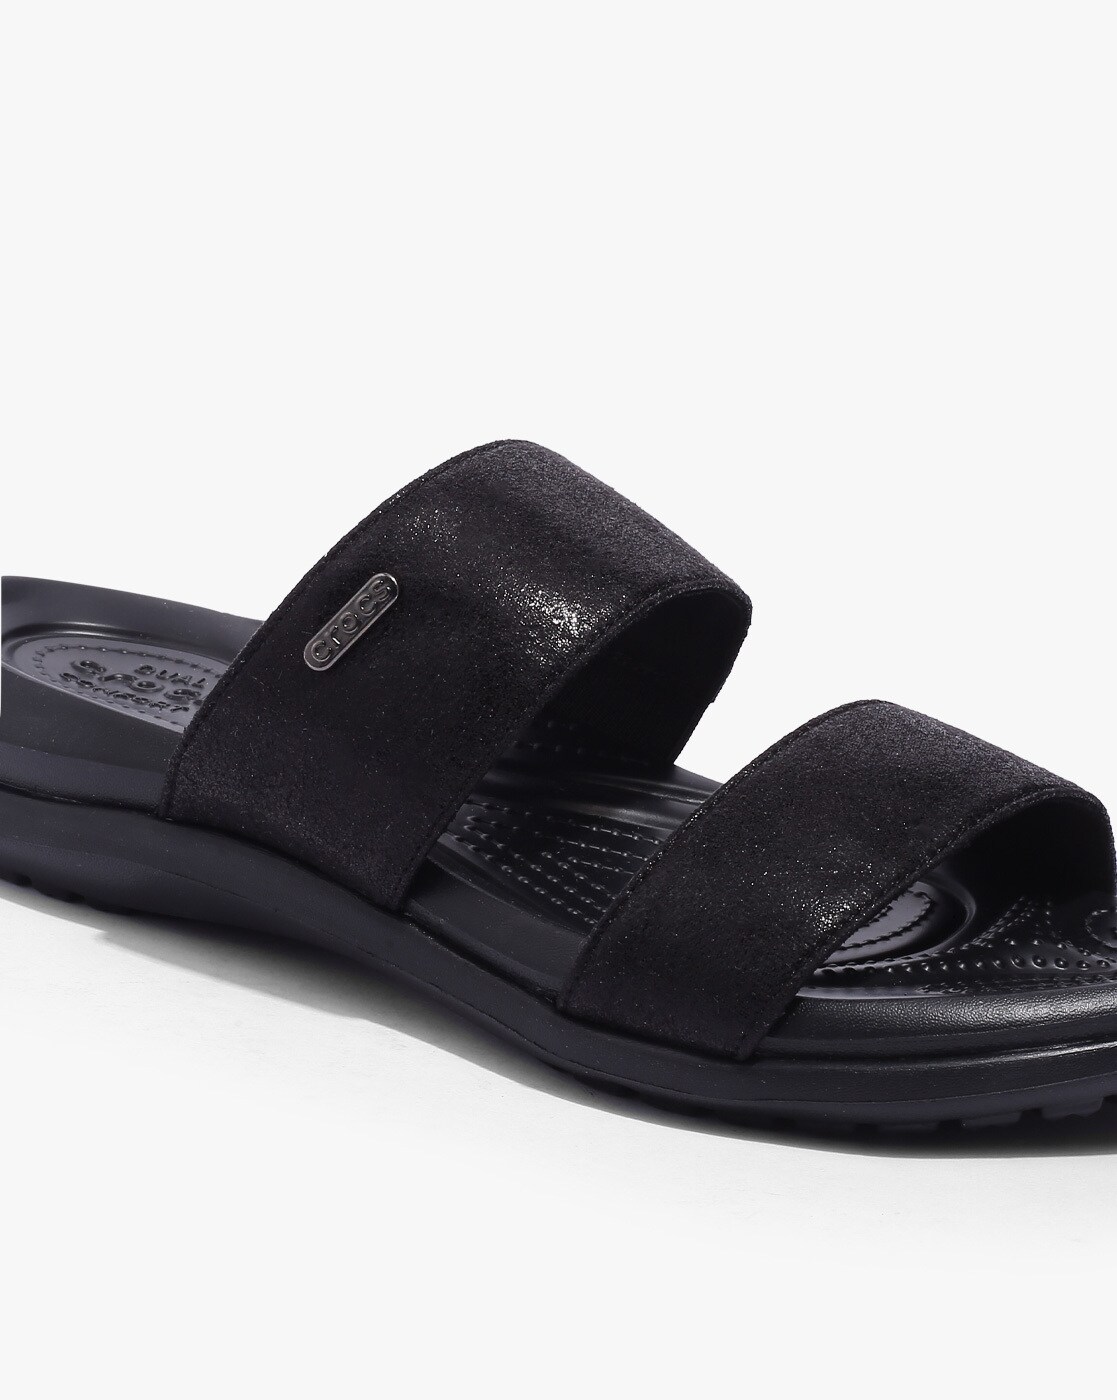 CROCS Dual Comfort Black Wedges Sandals 10W | Black wedges sandals, Black  wedges, Wedge sandals